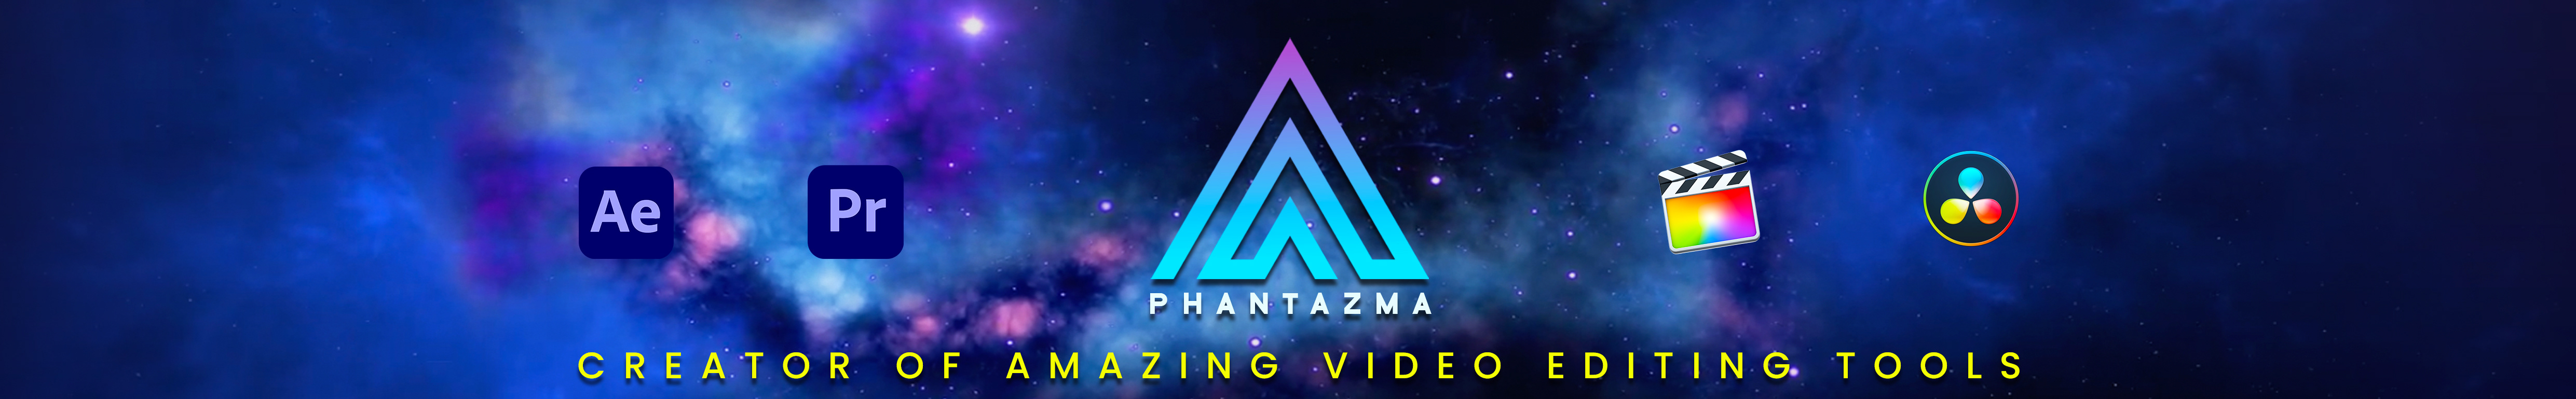 PHANTAZMA VFX のプロファイルバナー